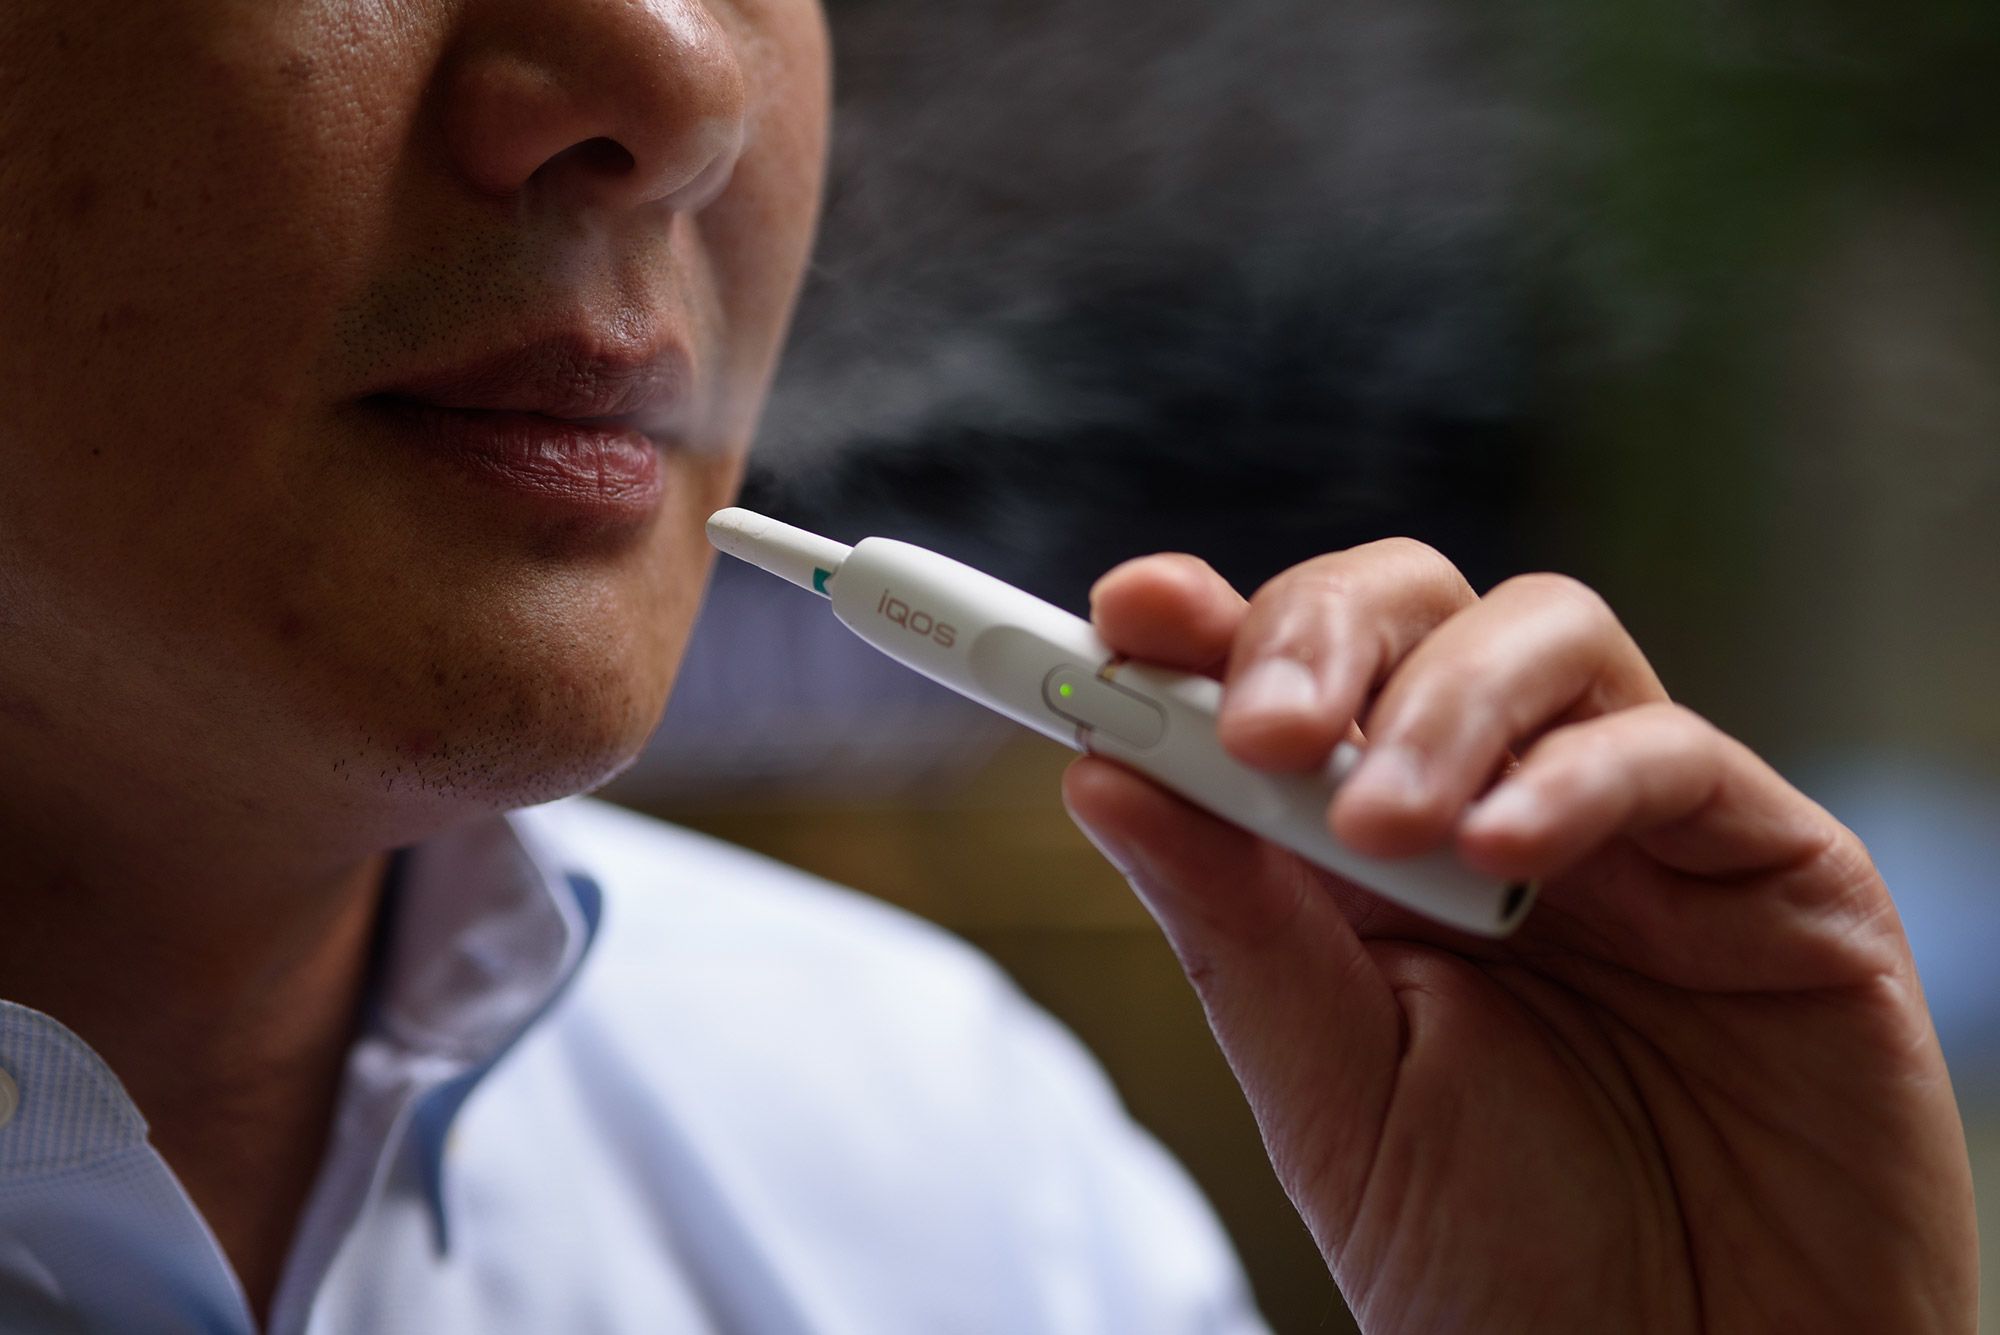 FDA clears iQOS, Philip Morris' heated tobacco device